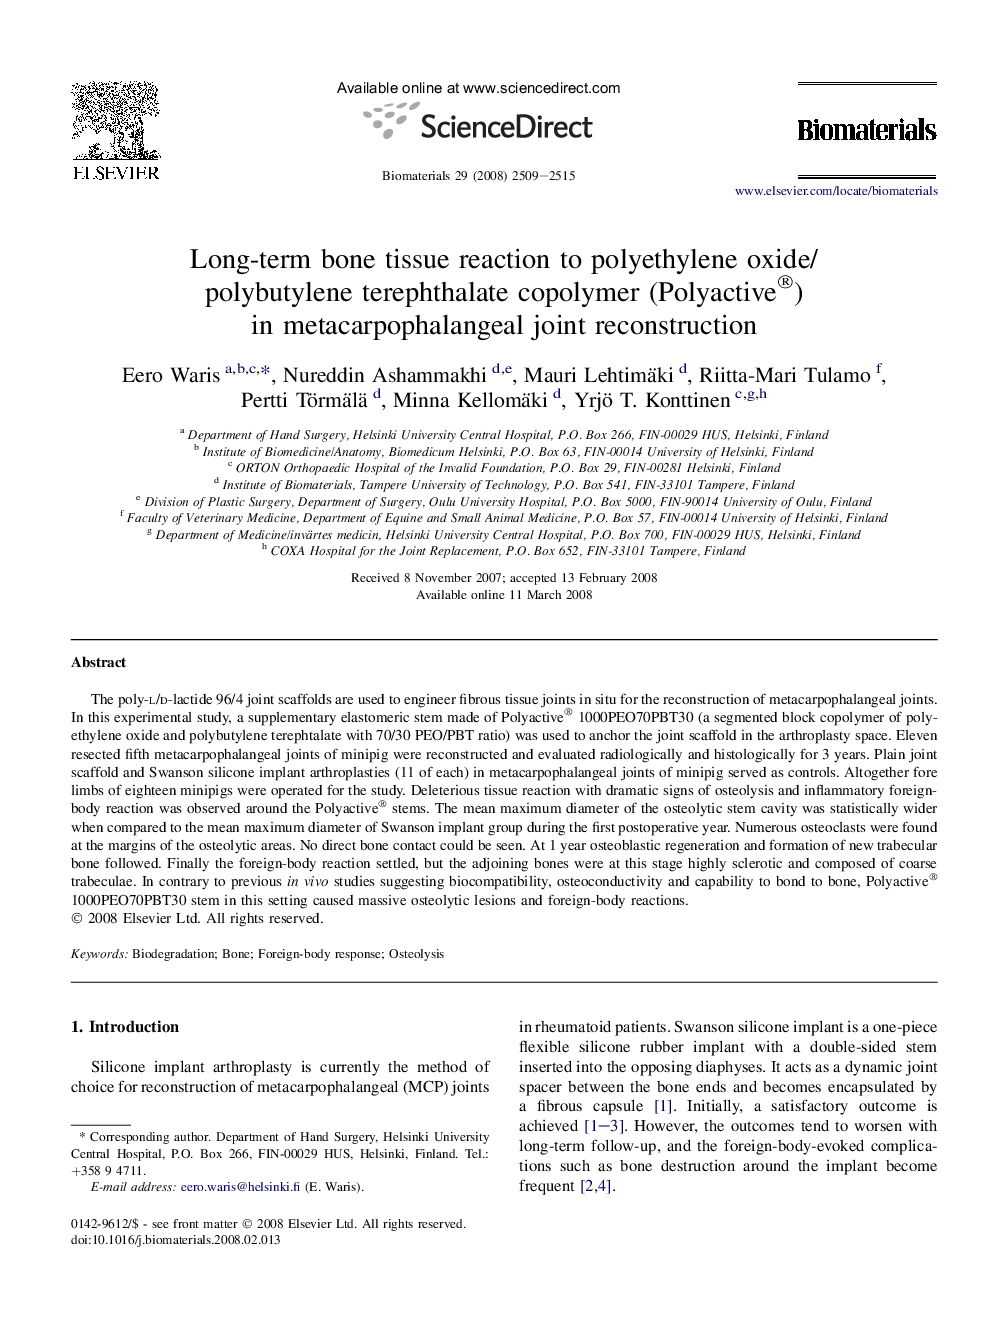 Long-term bone tissue reaction to polyethylene oxide/polybutylene terephthalate copolymer (Polyactive®) in metacarpophalangeal joint reconstruction